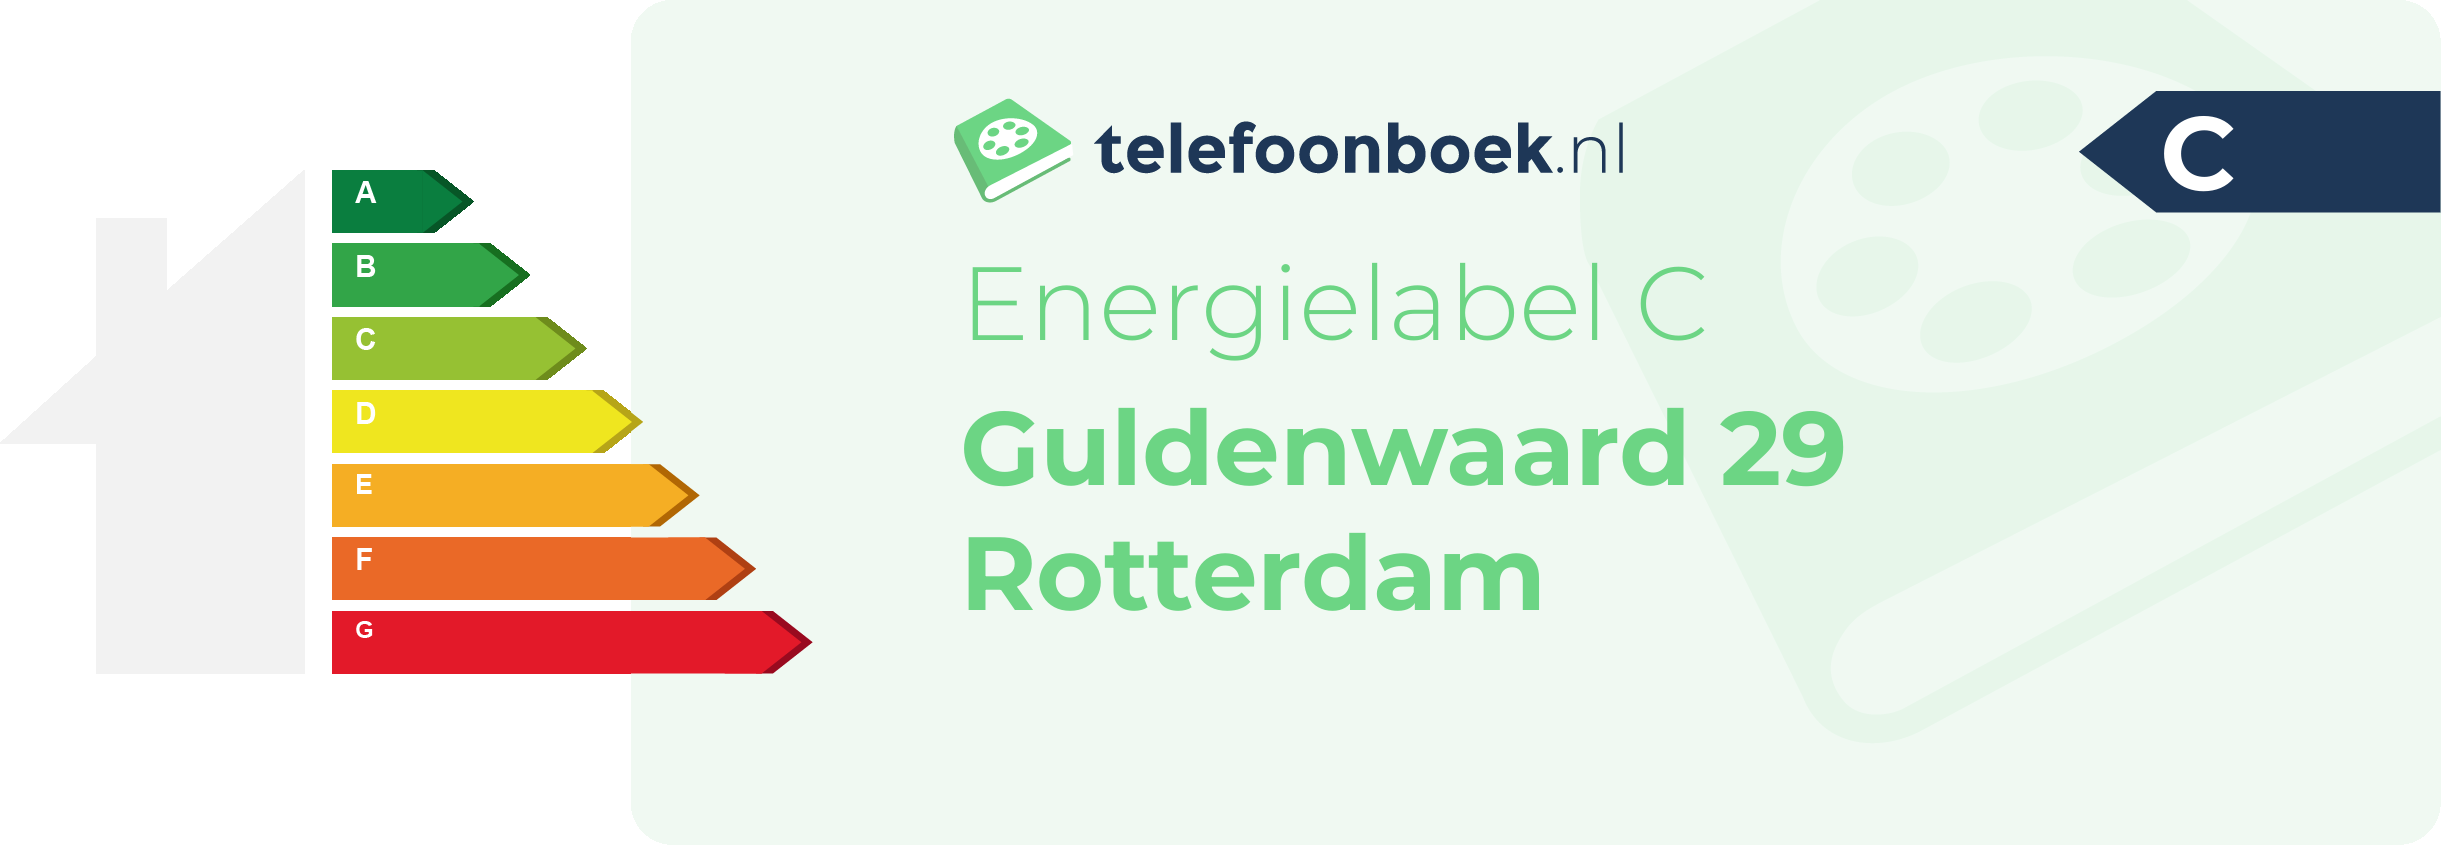 Energielabel Guldenwaard 29 Rotterdam